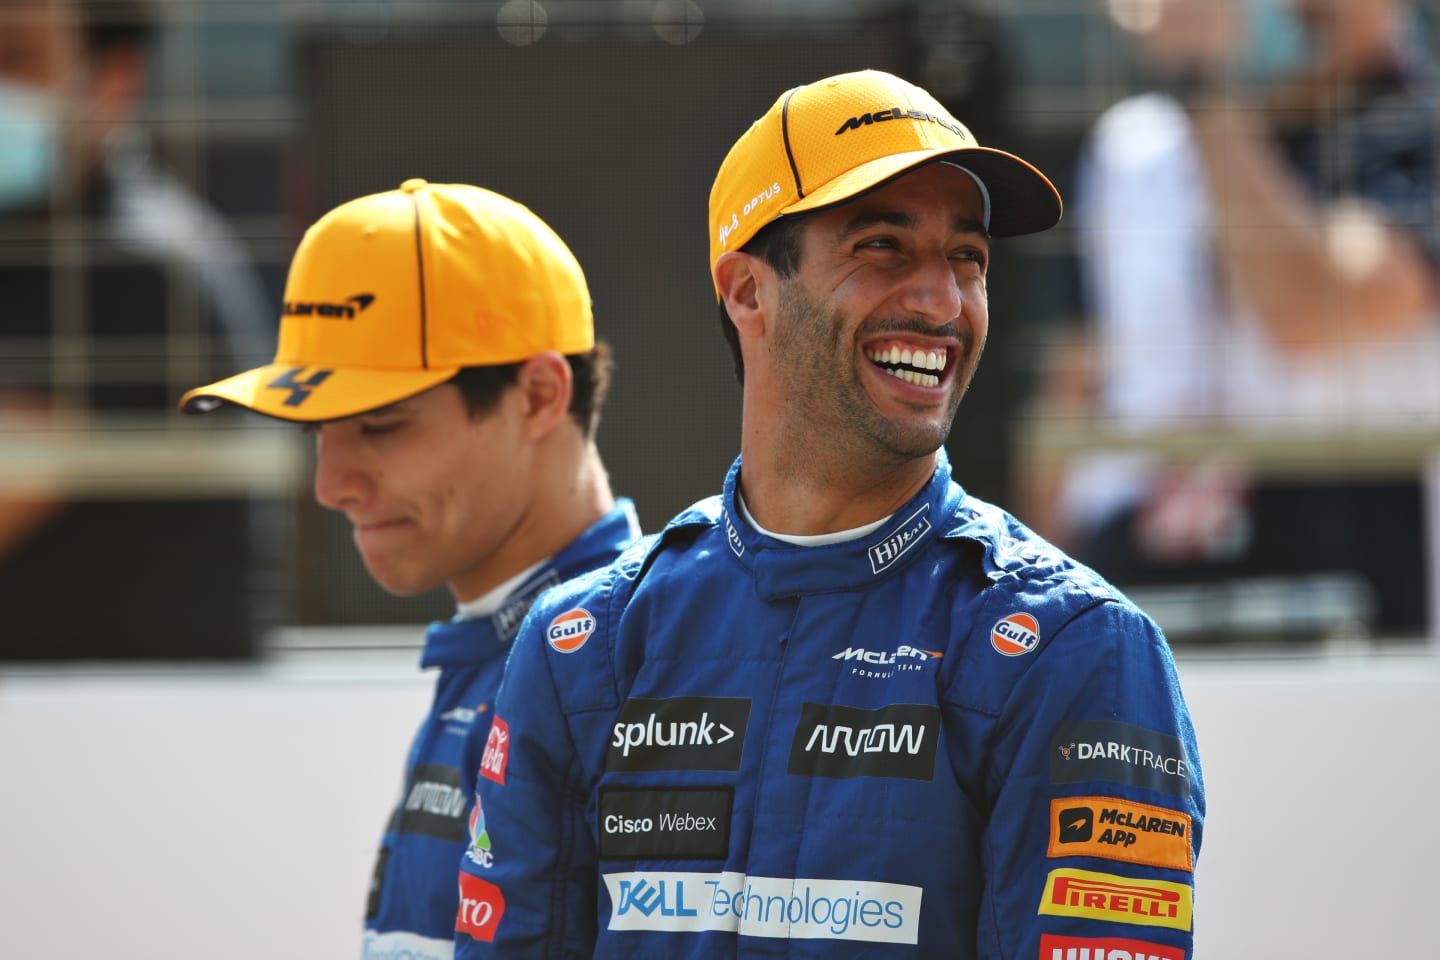 BAHRAIN, BAHRAIN - MARCH 12: Daniel Ricciardo of Australia and McLaren F1 and Lando Norris of Great